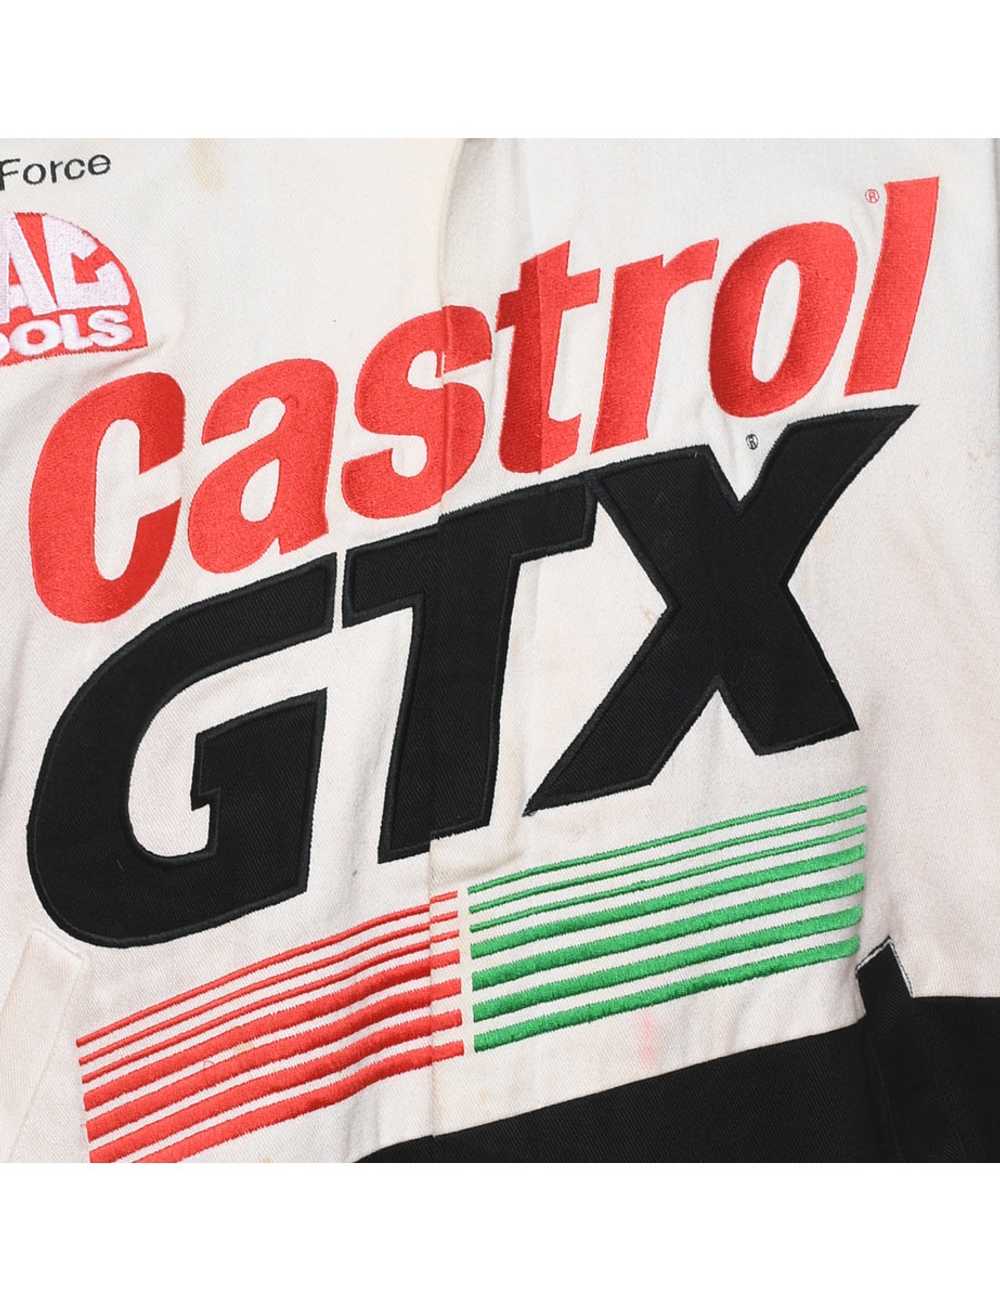 Castrol GTX Racing Jacket - L - image 3